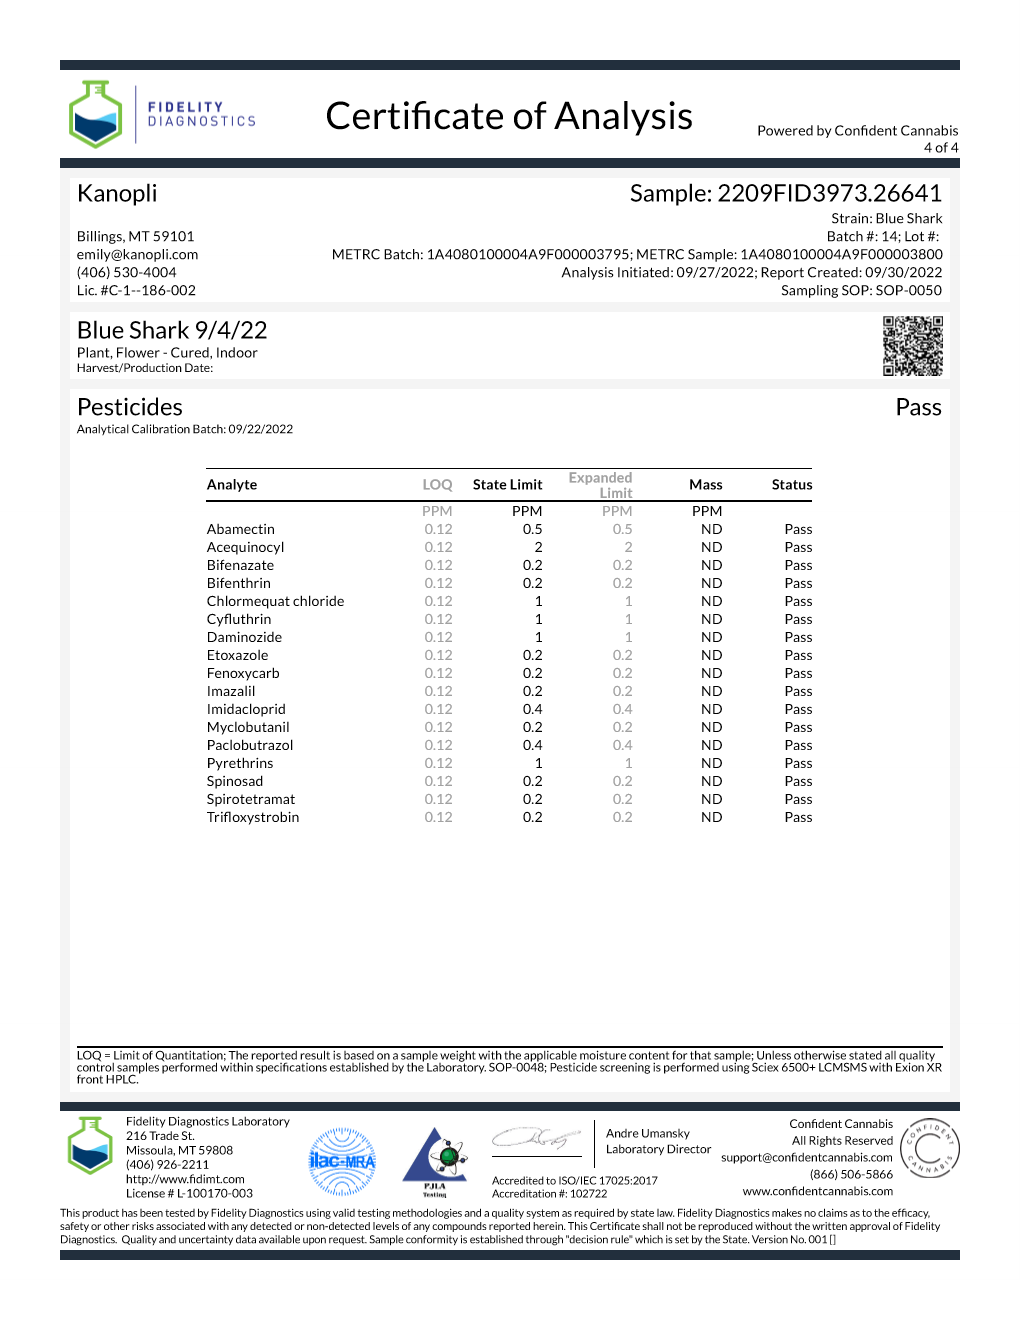 Blue Shark - Hybrid high CBD 9% CBD (Sept. 2022) shorties (2.50 grams)